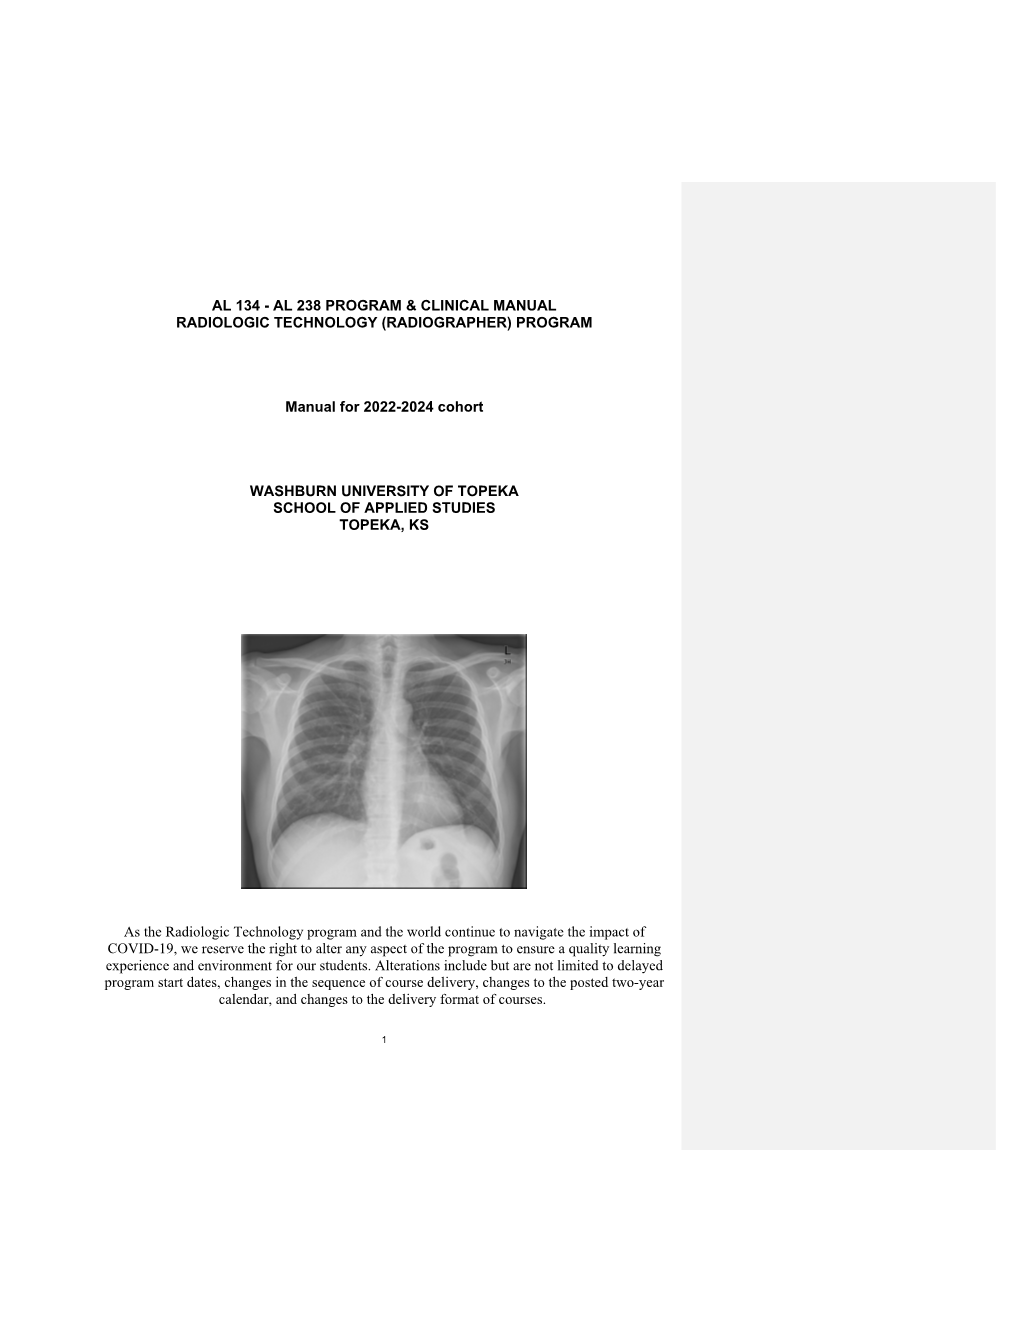 Al 134 - Al 238 Program & Clinical Manual Radiologic Technology (Radiographer) Program